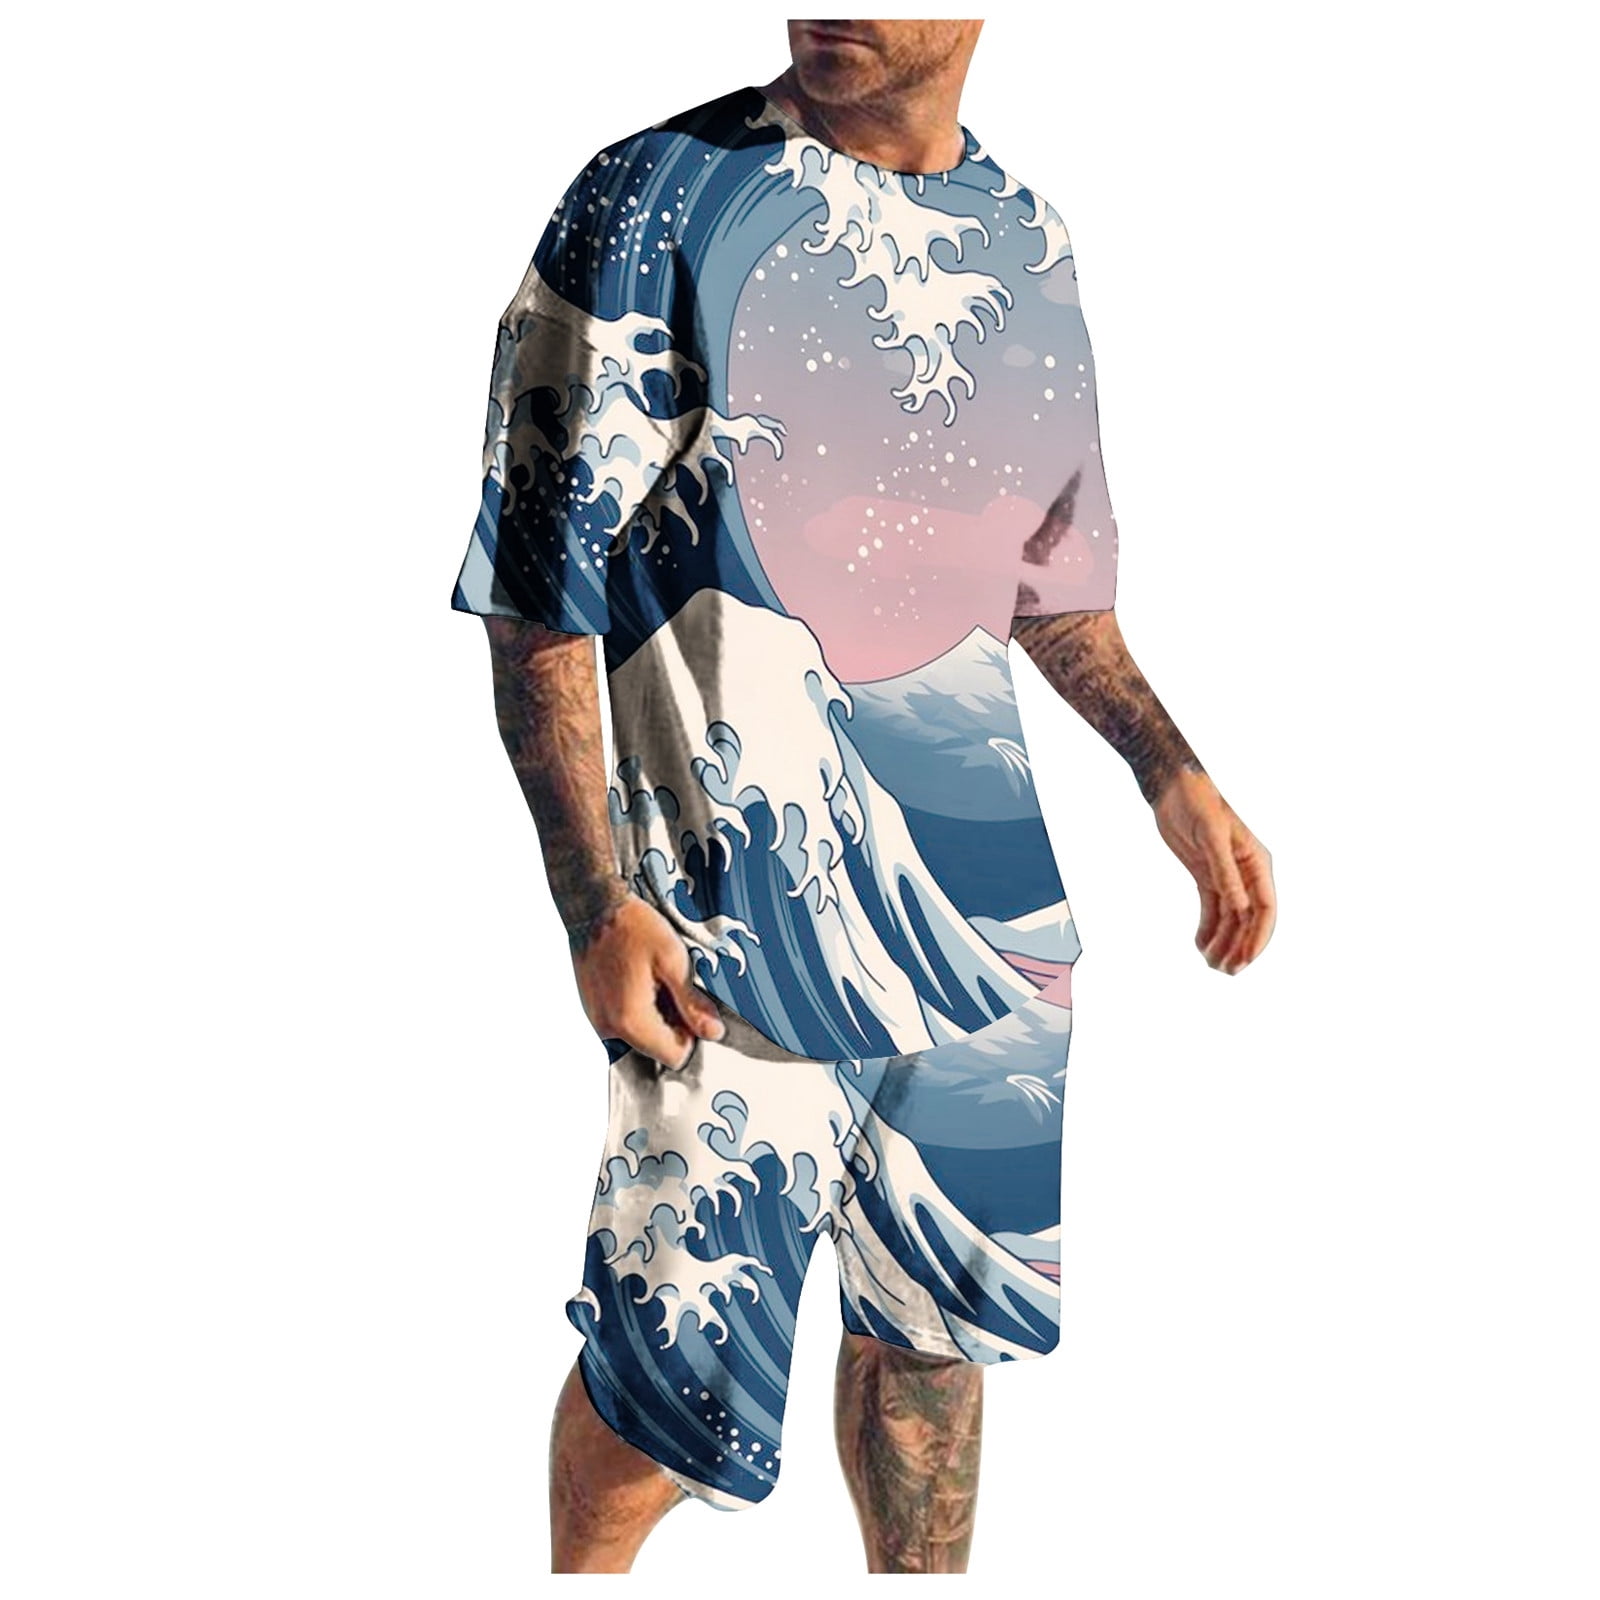 8QIDA Men's Suit 2 Piece Hawaiiss Print Short T+ Shorts Fashion Street ...